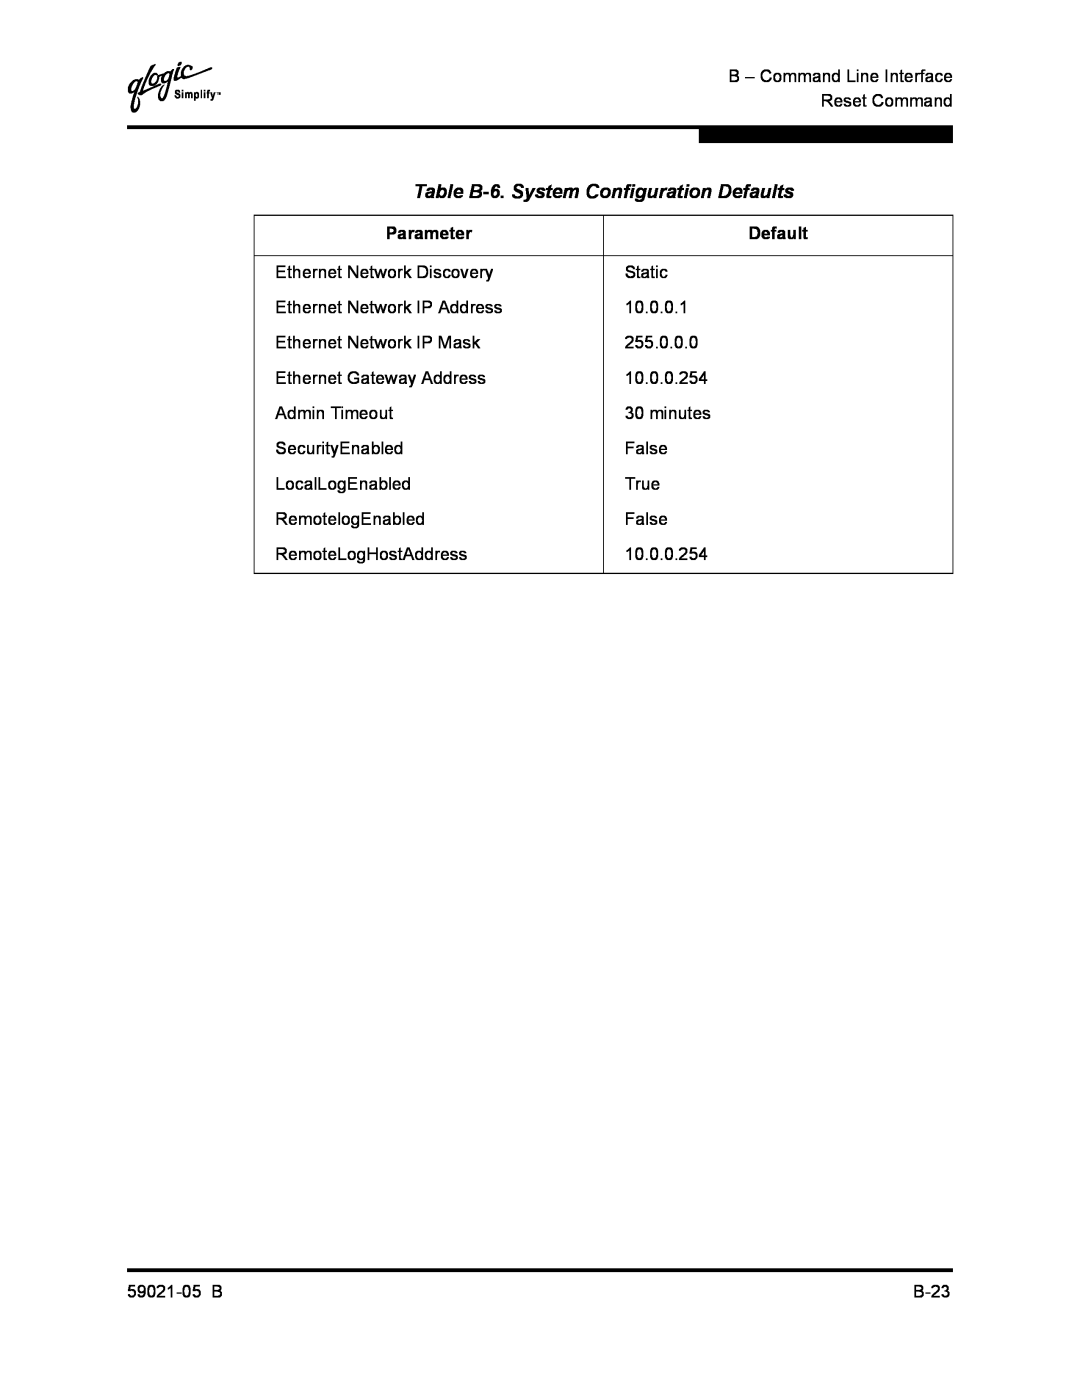 Q-Logic 59021-05 B manual Table B-6. System Configuration Defaults, Parameter 